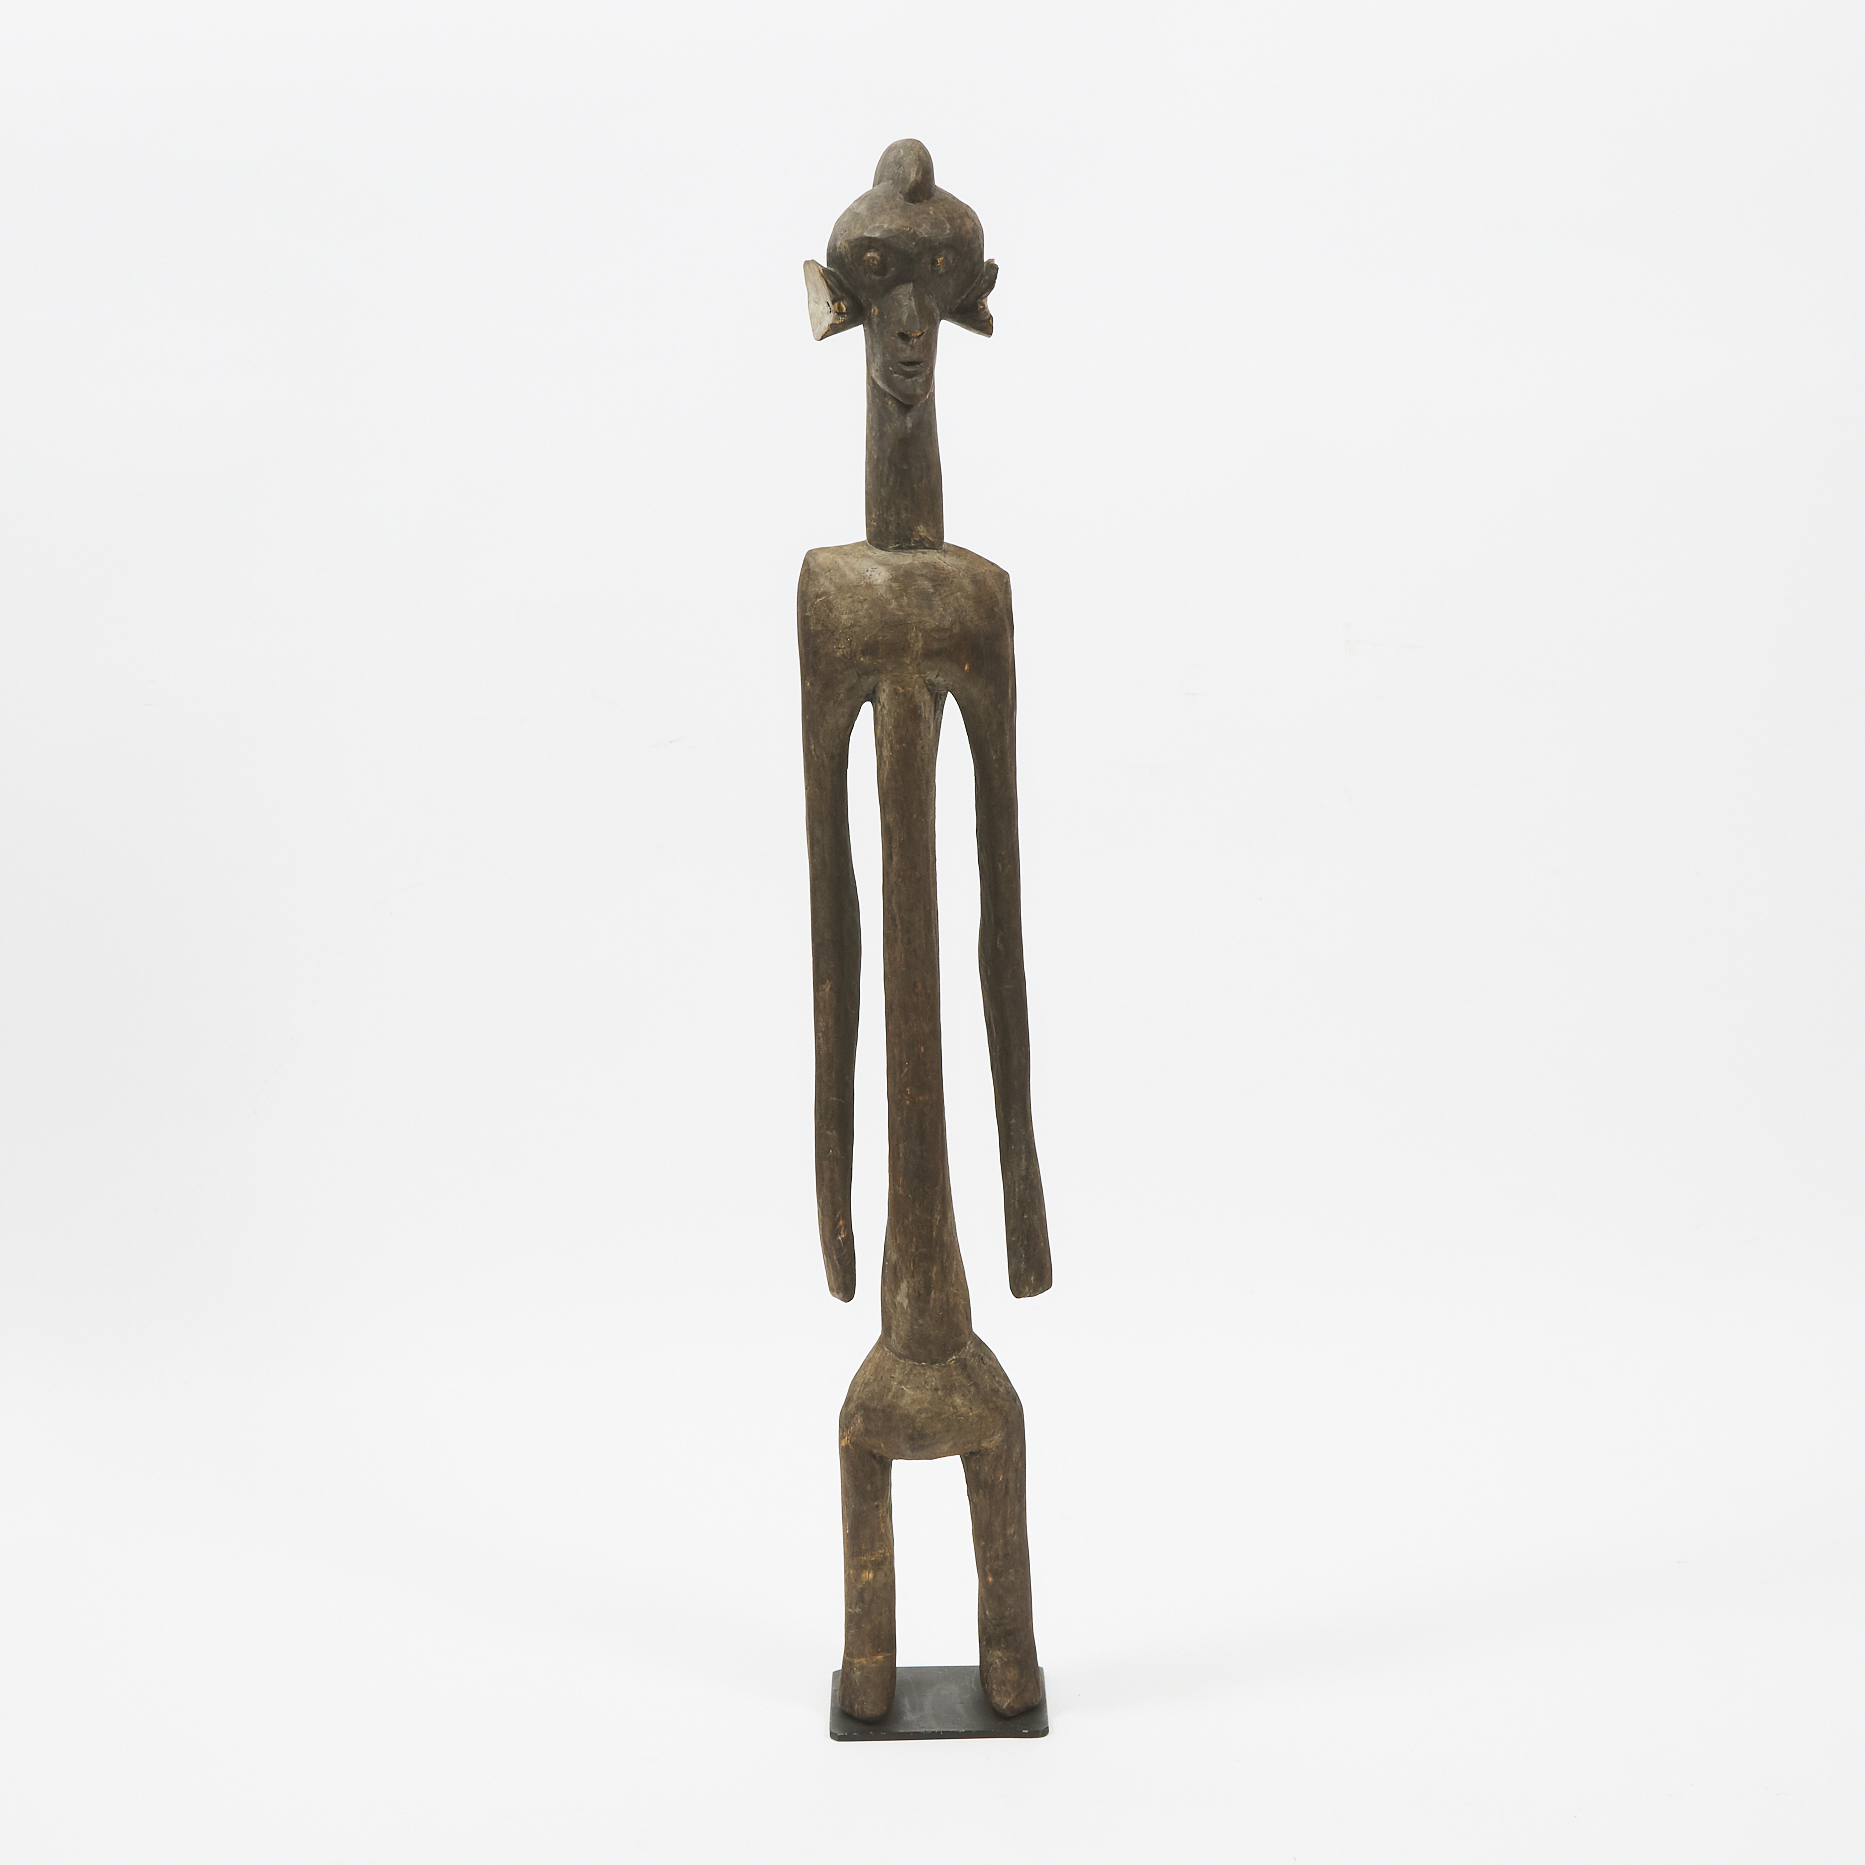 Mumuye Figure, Nigeria, West Africa, early to mid 20th century